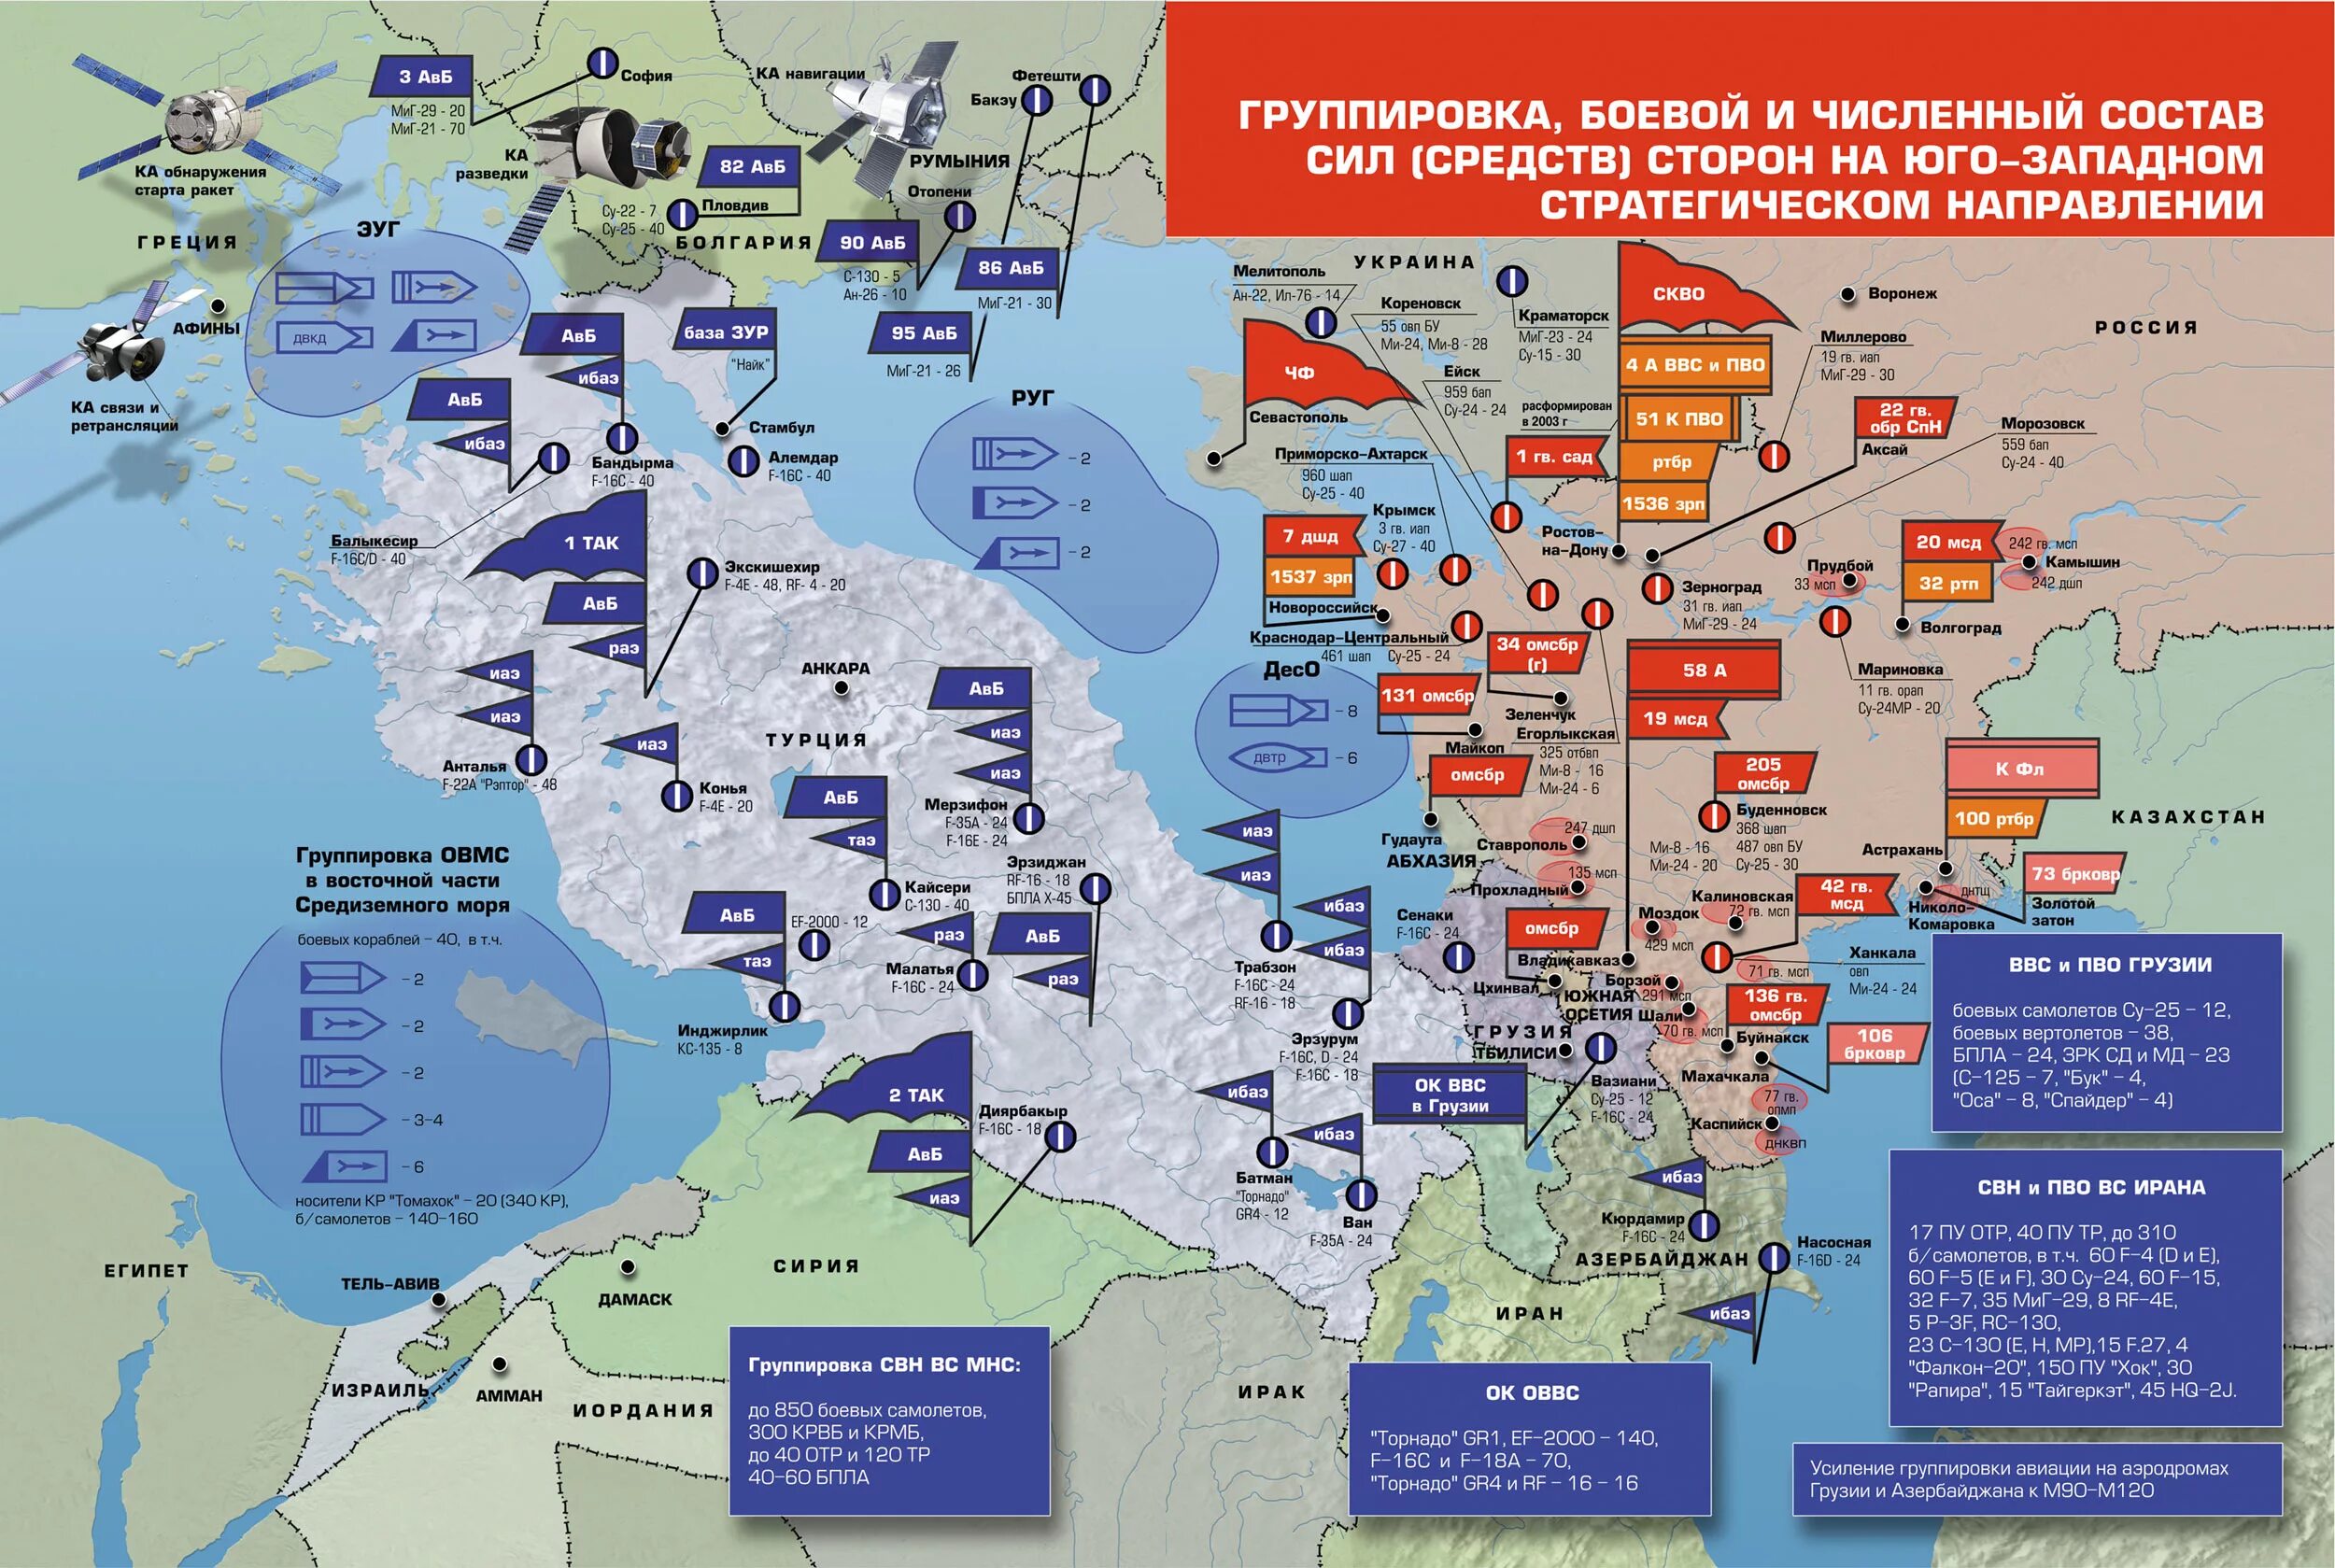 Ситуация с нато. ПВО НАТО В Европе на карте. Военные базы НАТО В Европе на карте. Карта размещения войск НАТО В Европе. Группировка войск НАТО на карте.